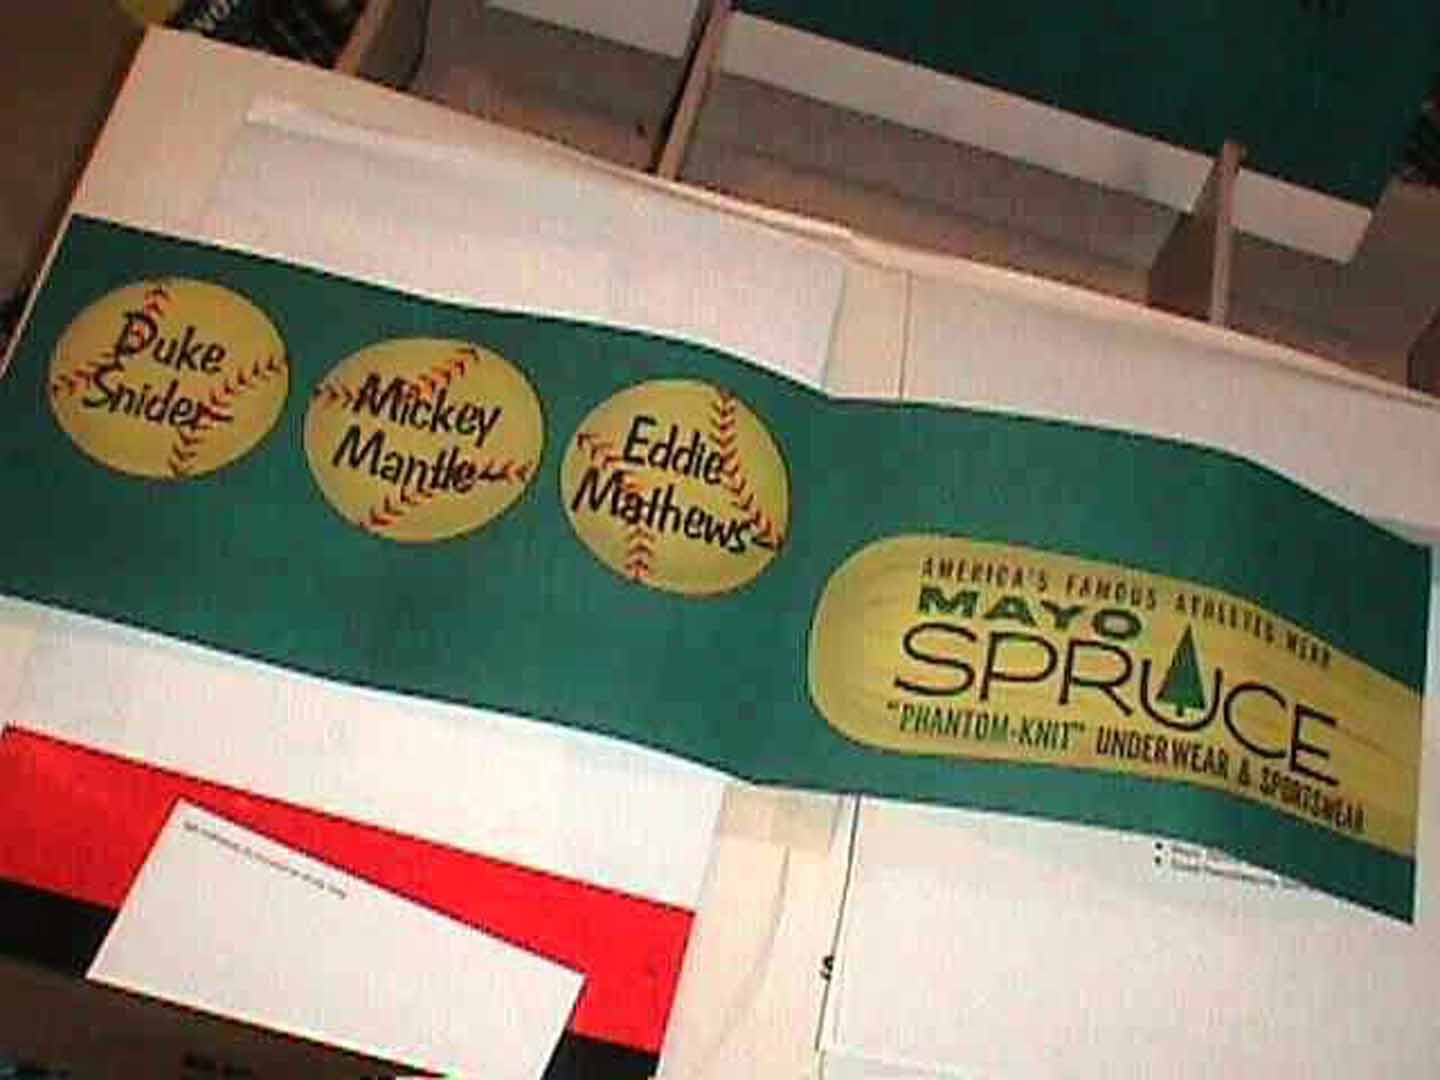 1955 mayo spruce store display